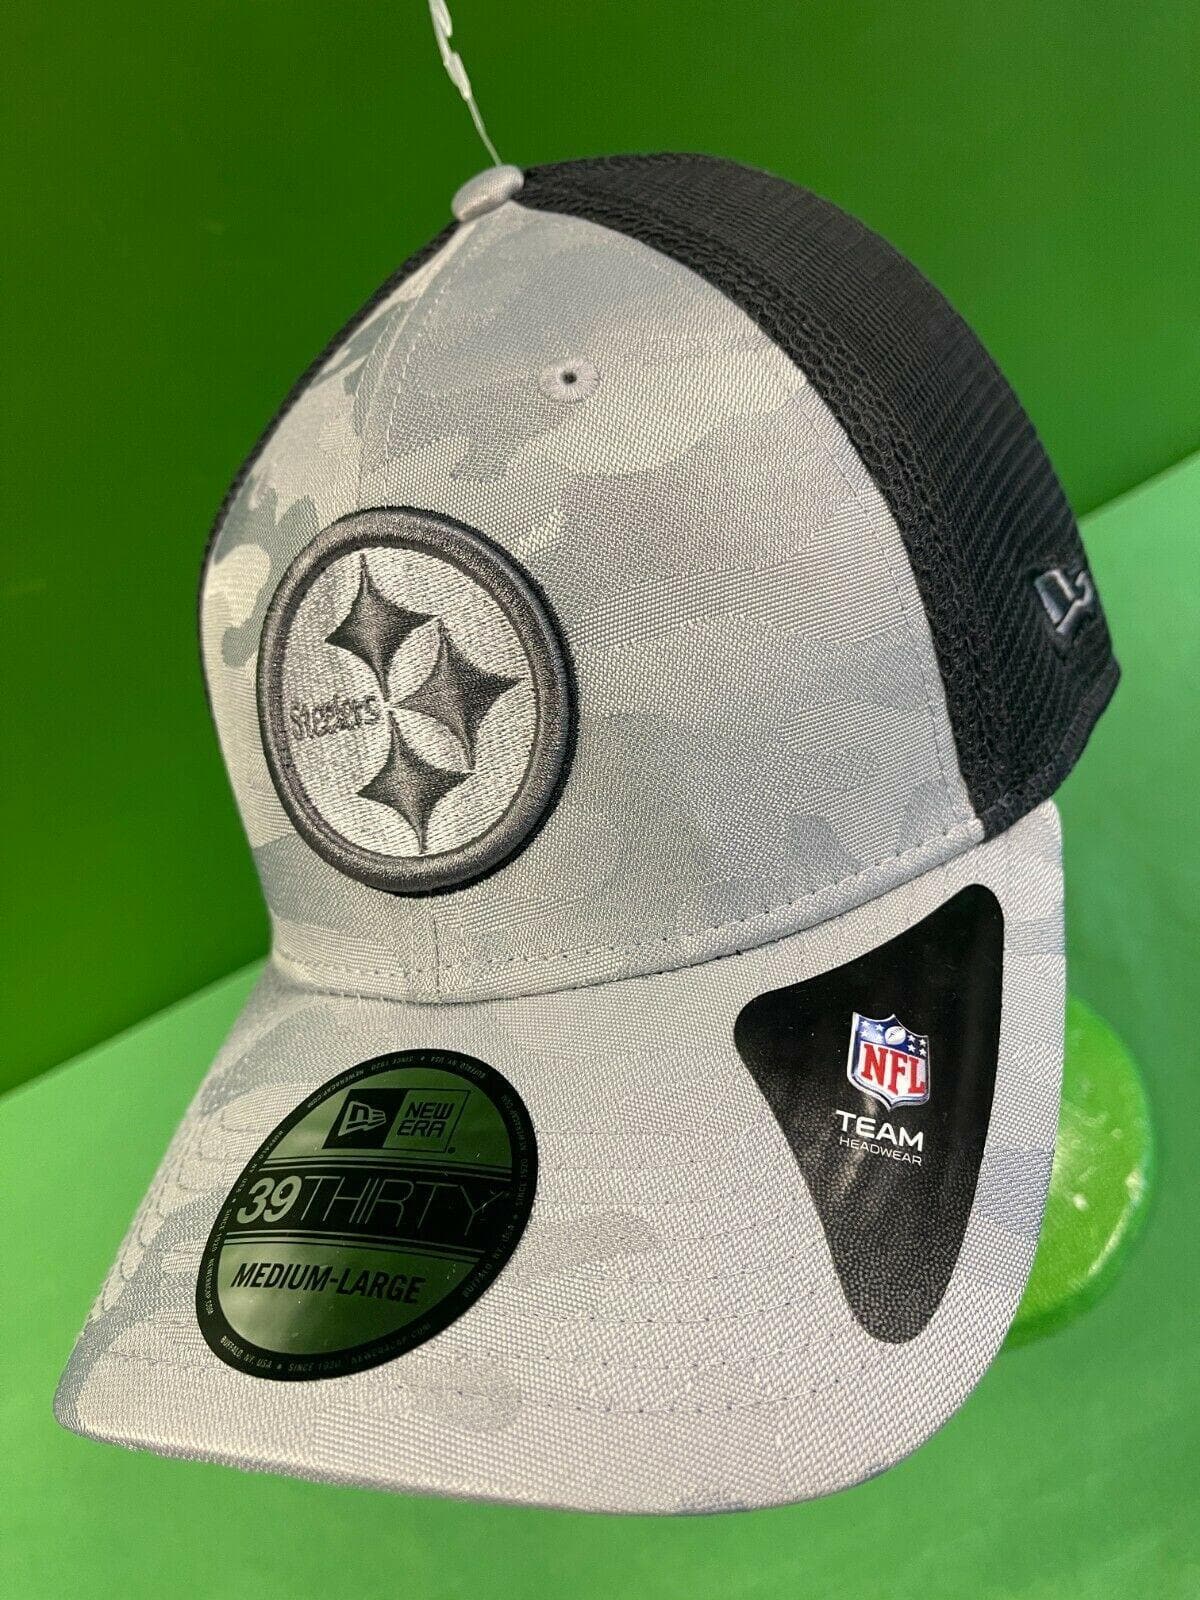 NFL Pittsburgh Steelers New Era 39THIRTY Grey Camo Trucker Cap/Hat Medium/Large NWT